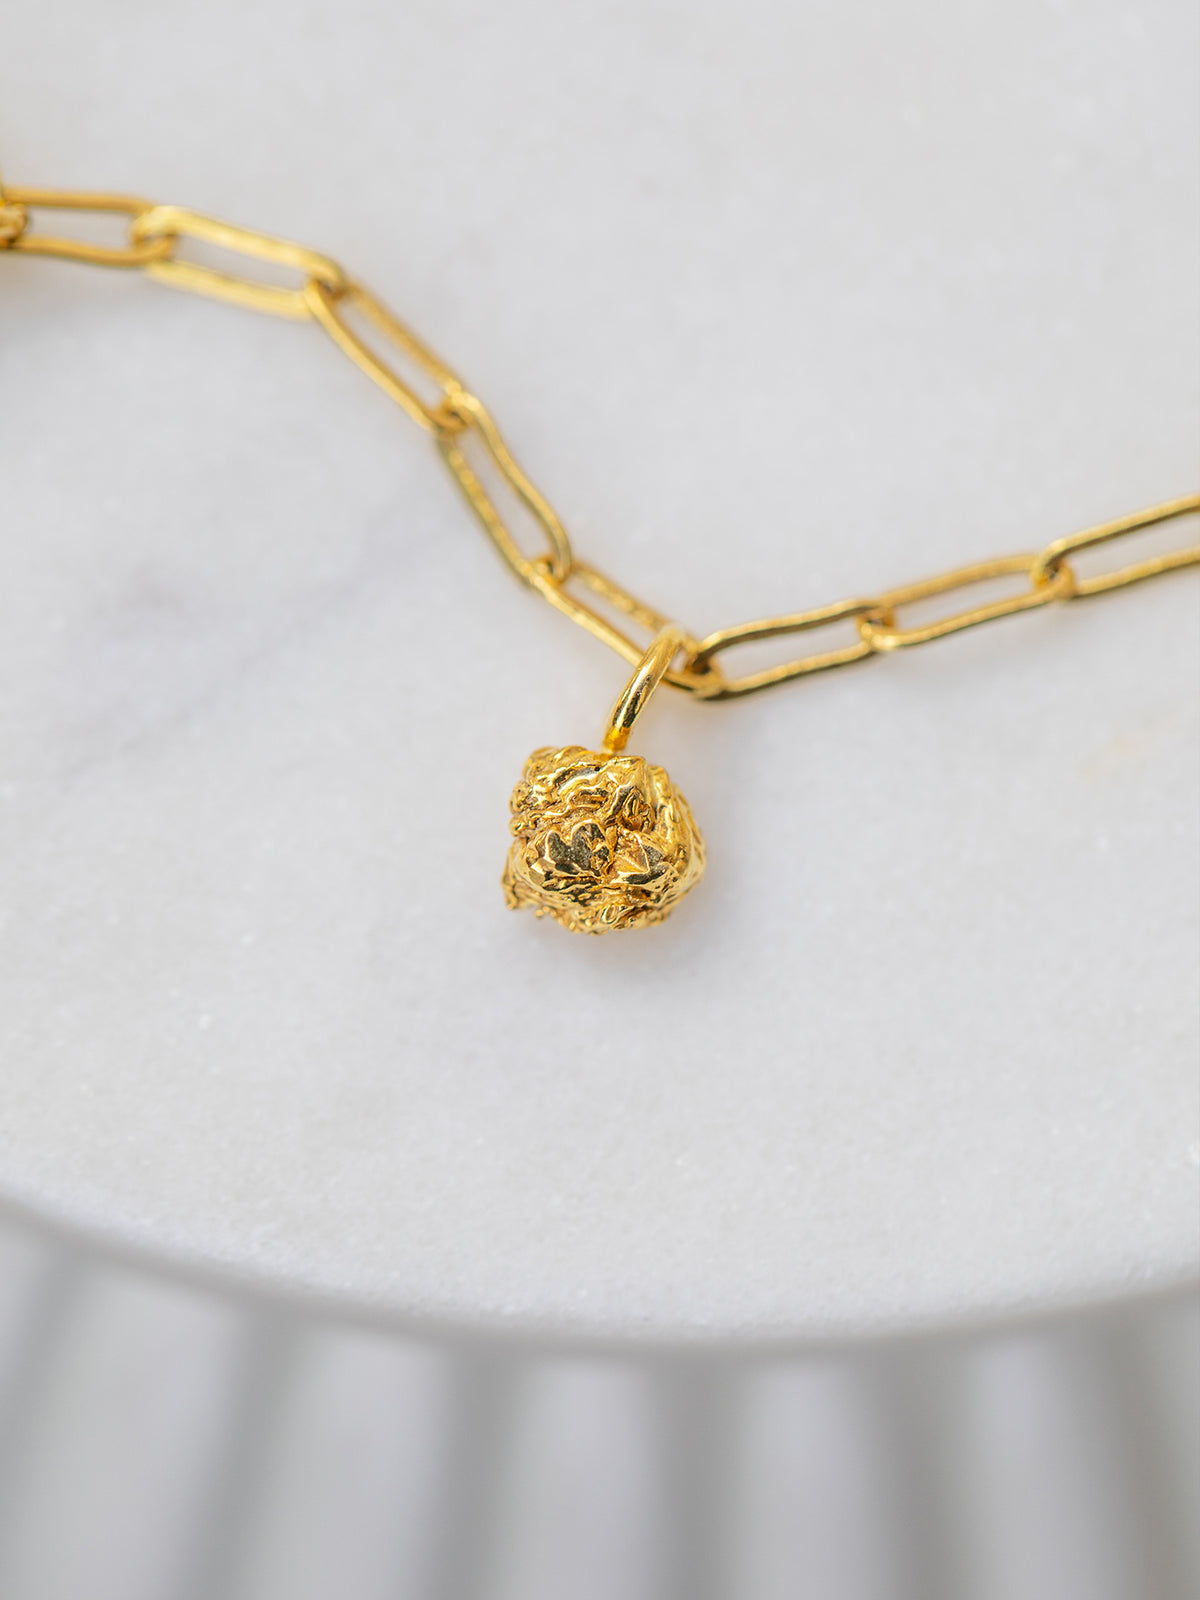 Archaic Chain Bracelet Gold